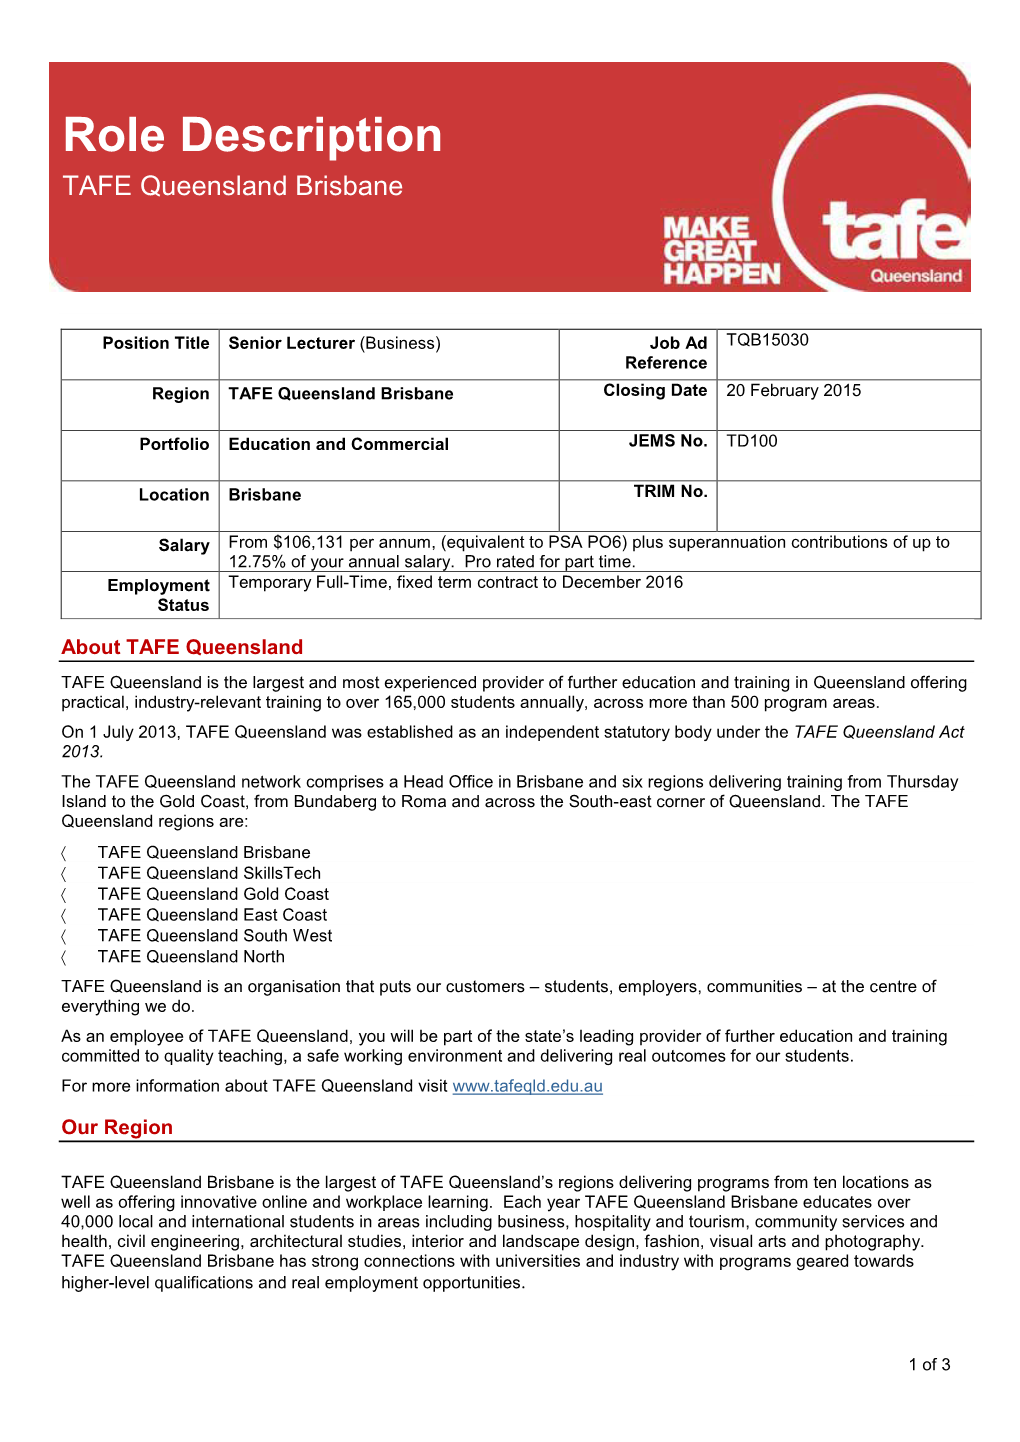 Role Description TAFE Queensland Brisbane